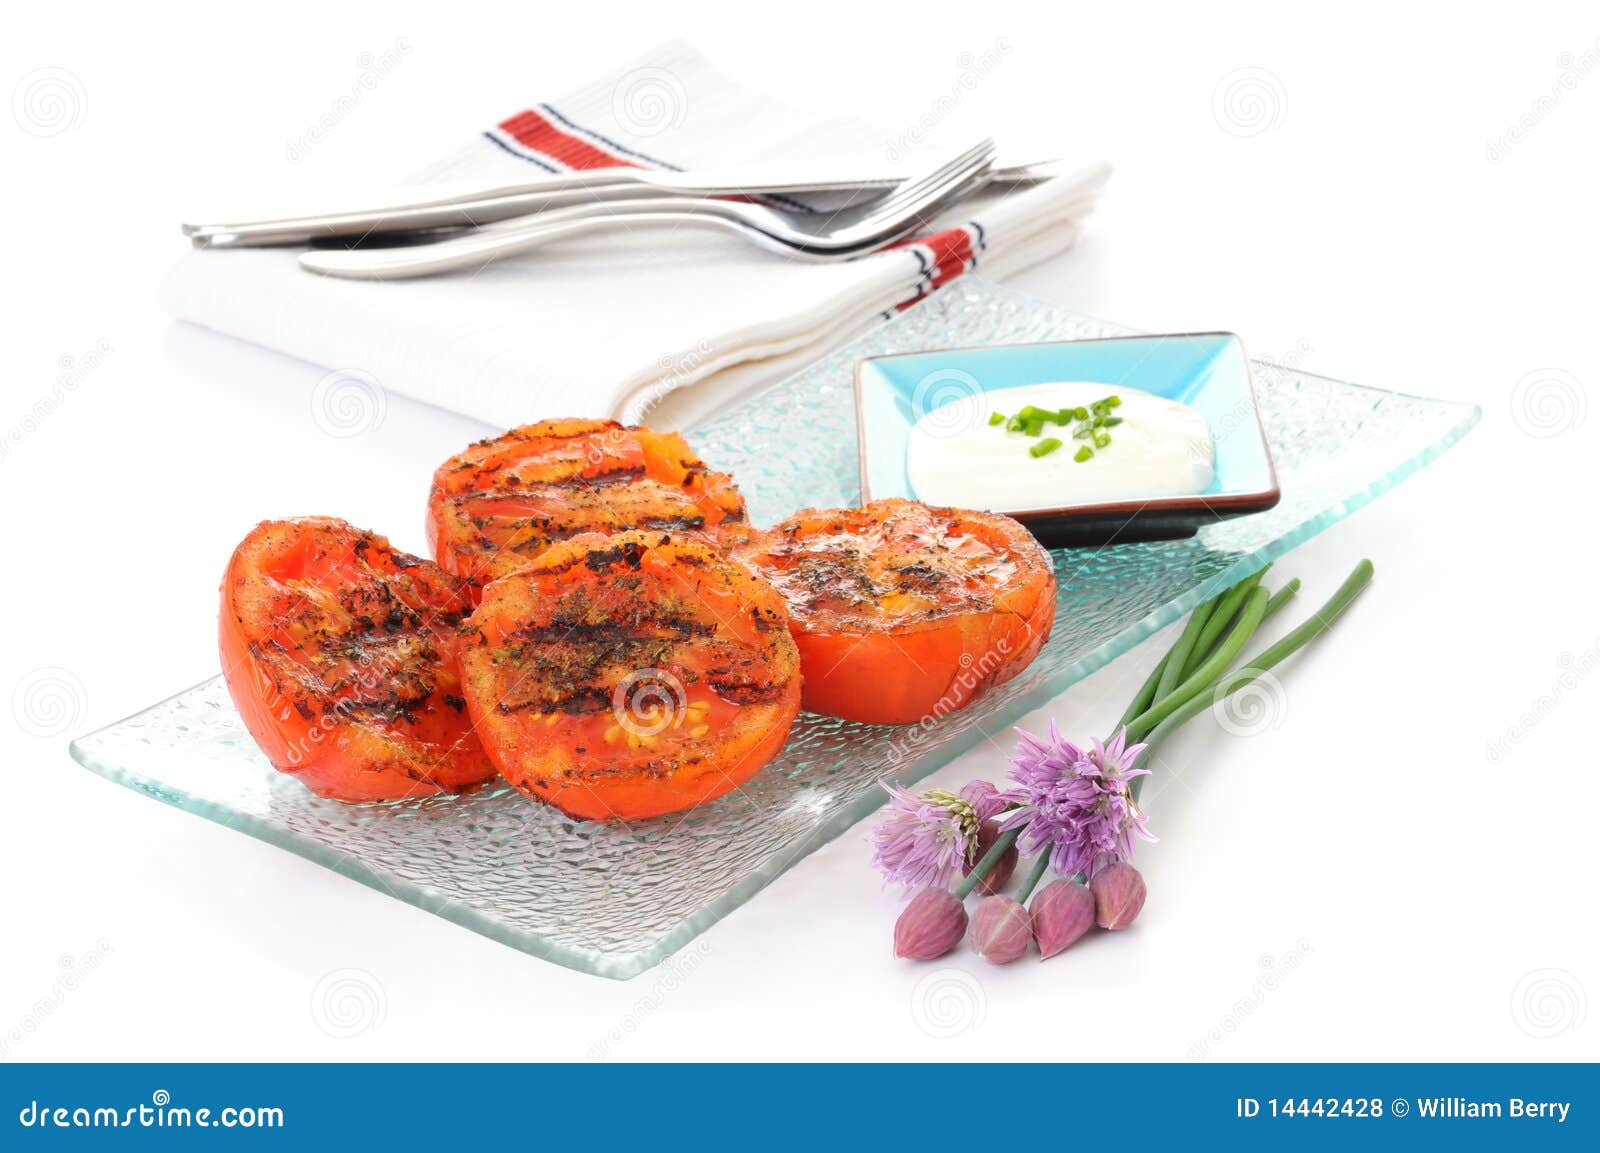 grilled tomato halves